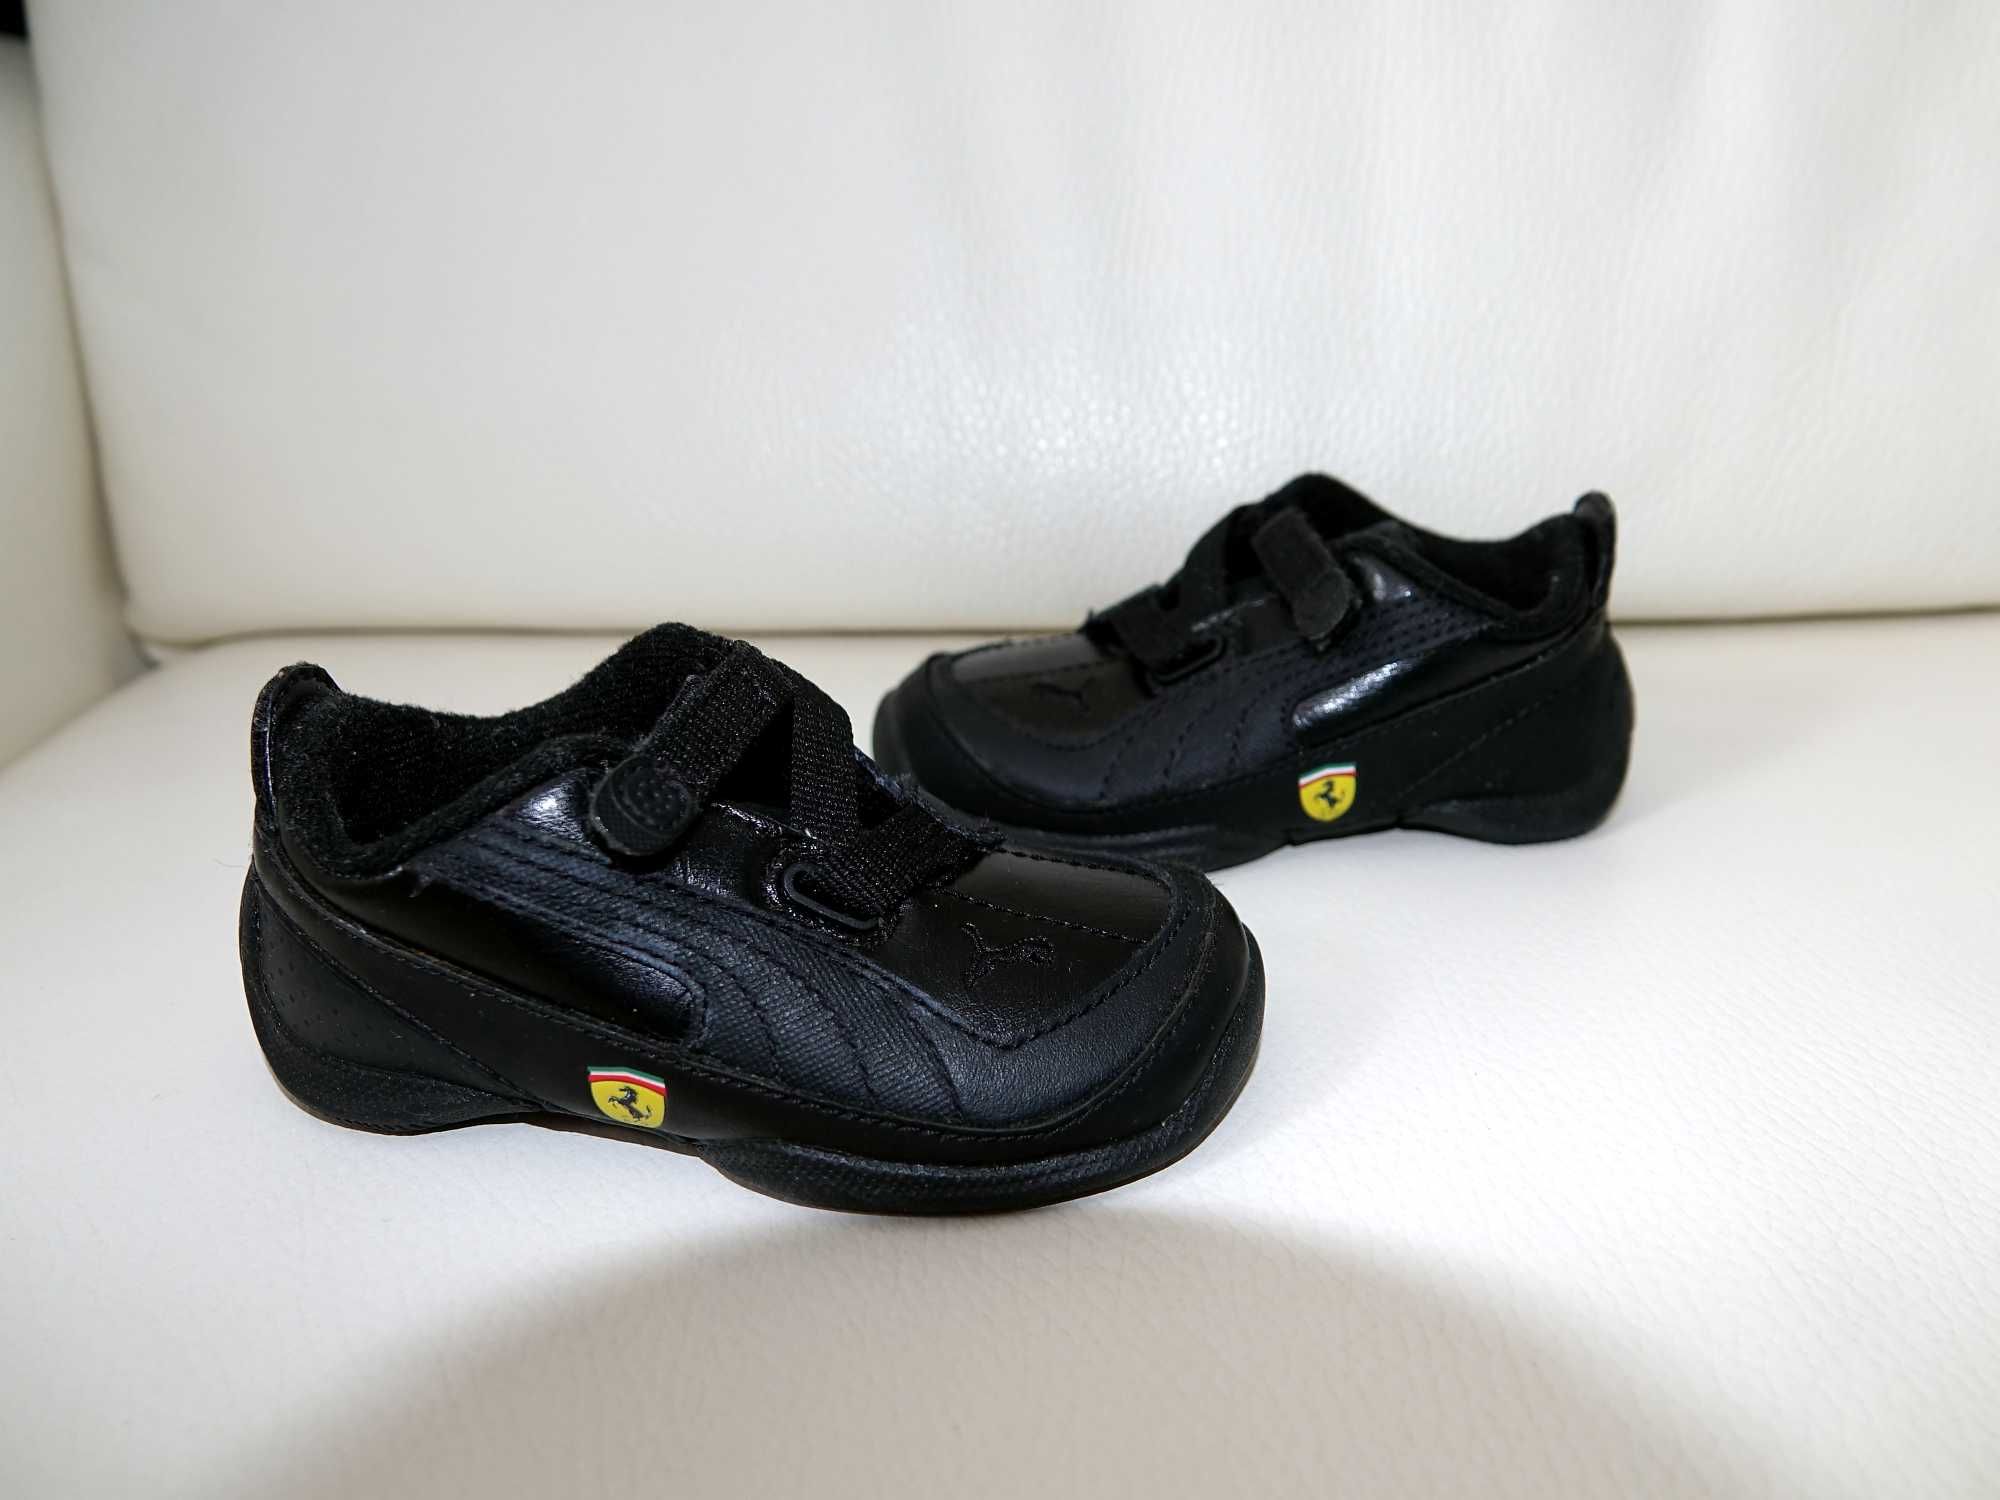 Puma Ferrari buciki skórzane na rzepy 13 cm + Gratis buty Nike 13 cm